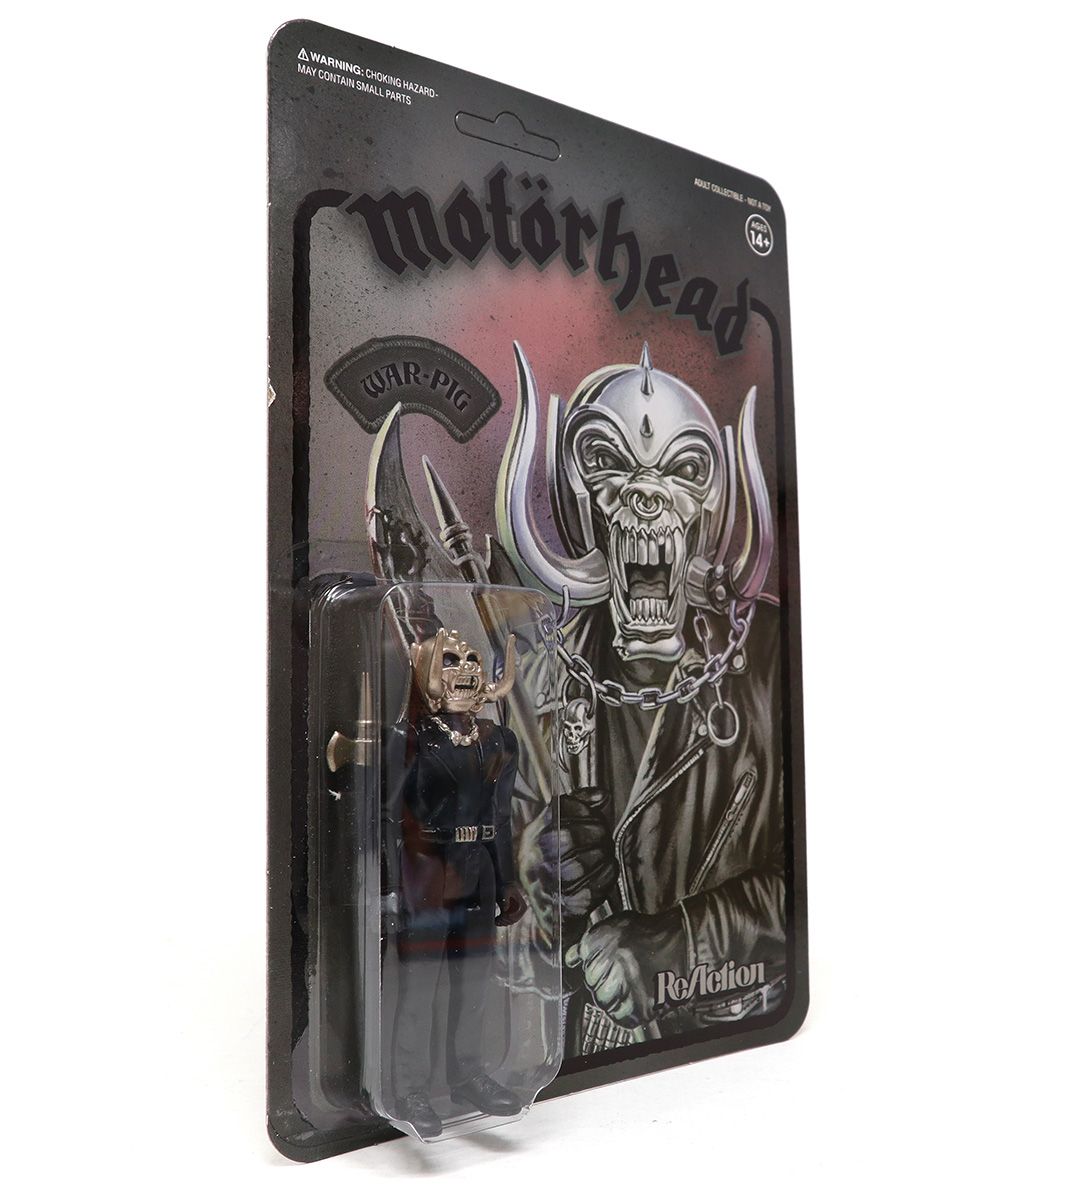 Motörhead - black series - ReAction figure